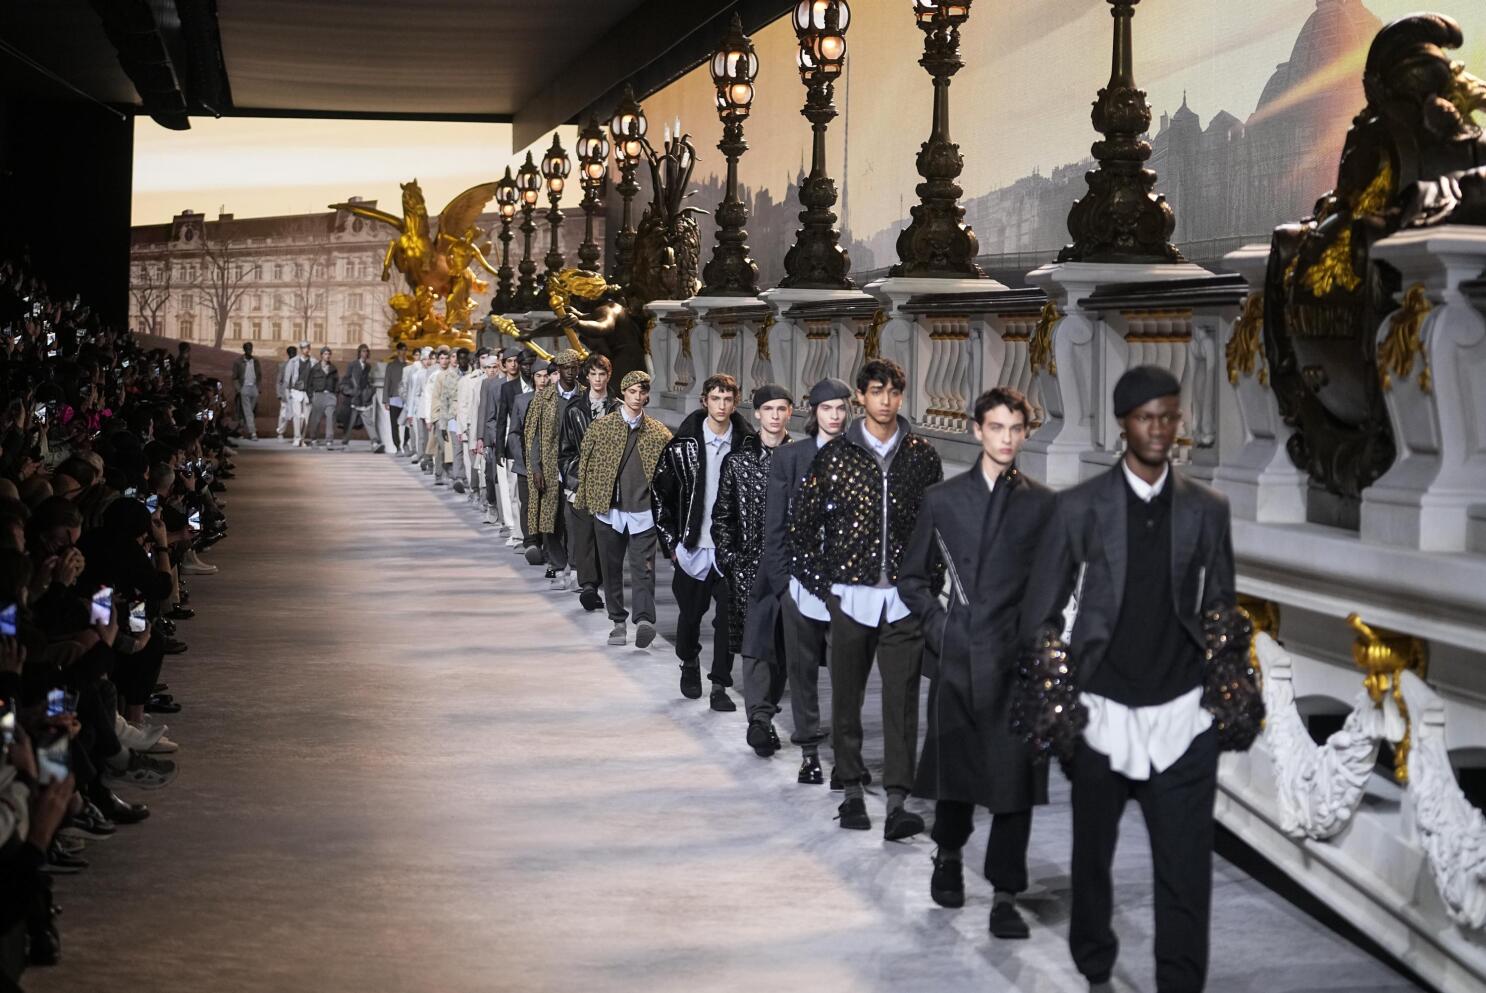 Louis Vuitton at Paris fashion week: the Instagram clues, Fashion